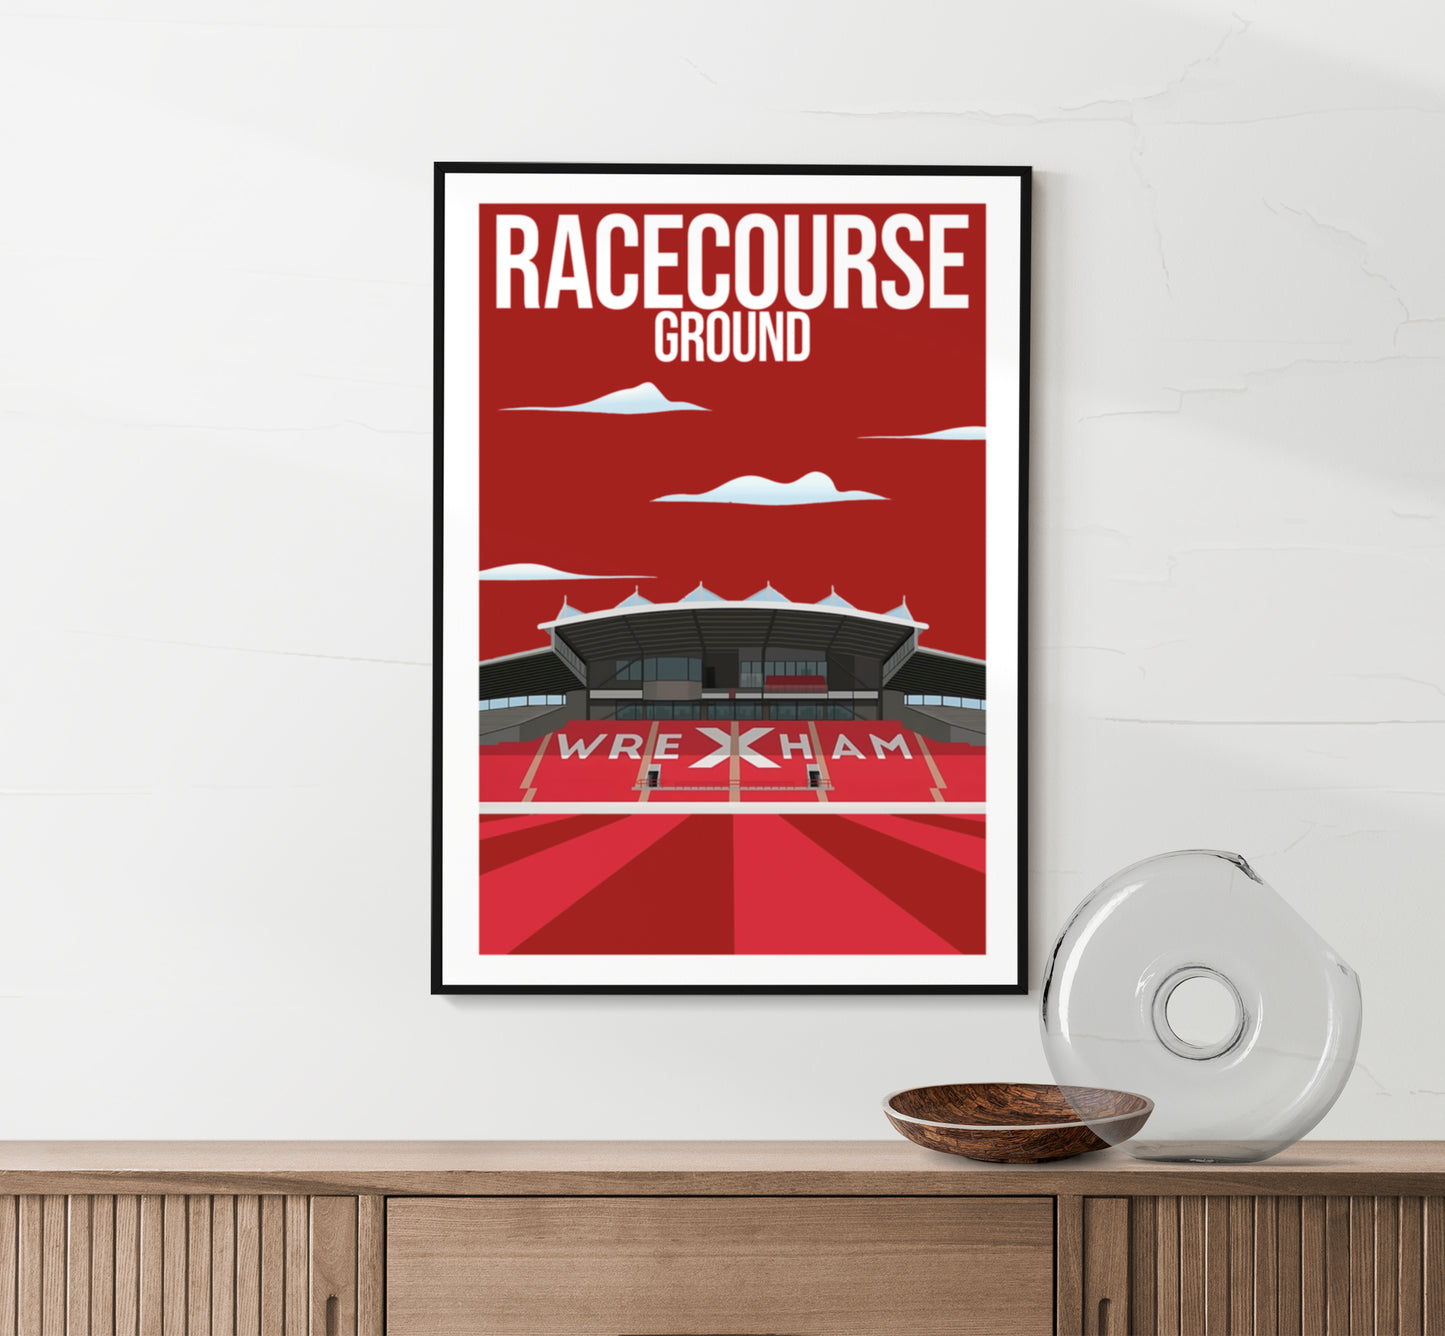 Racecourse Ground Poster